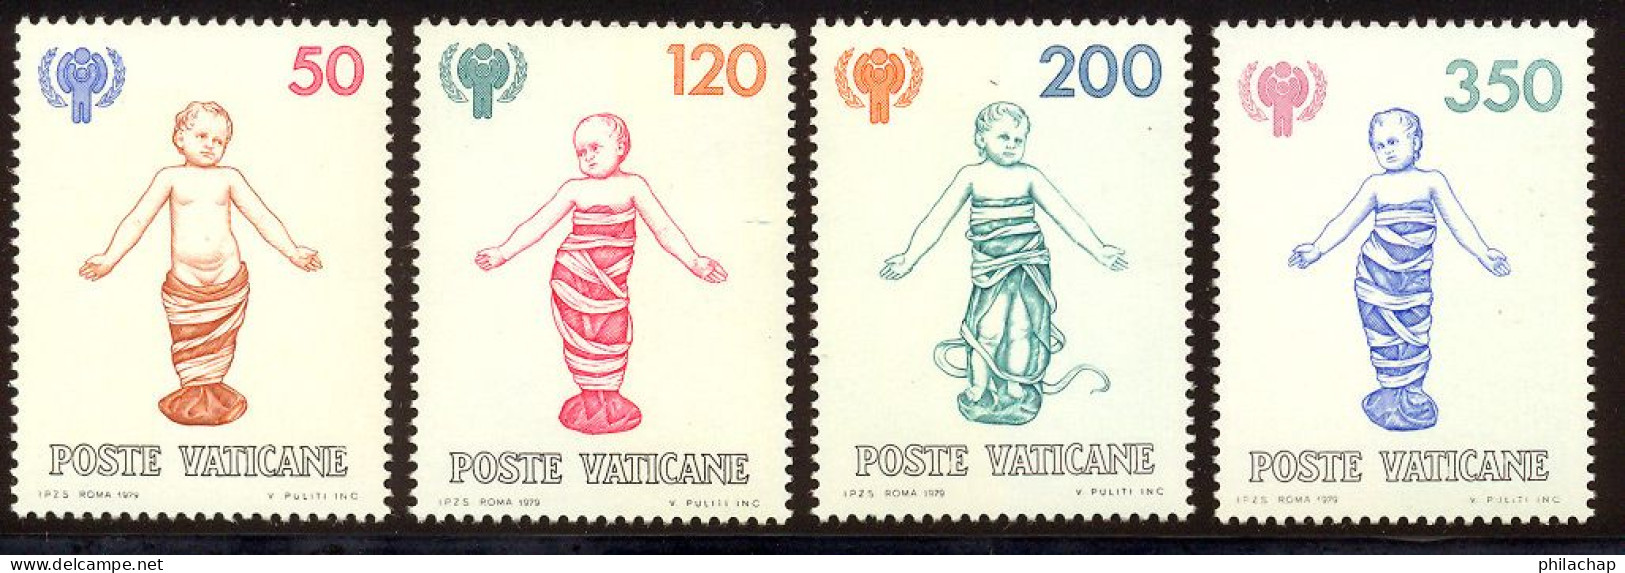 Vatican 1979 Yvert 685 / 688 ** TB Bord De Feuille - Nuovi